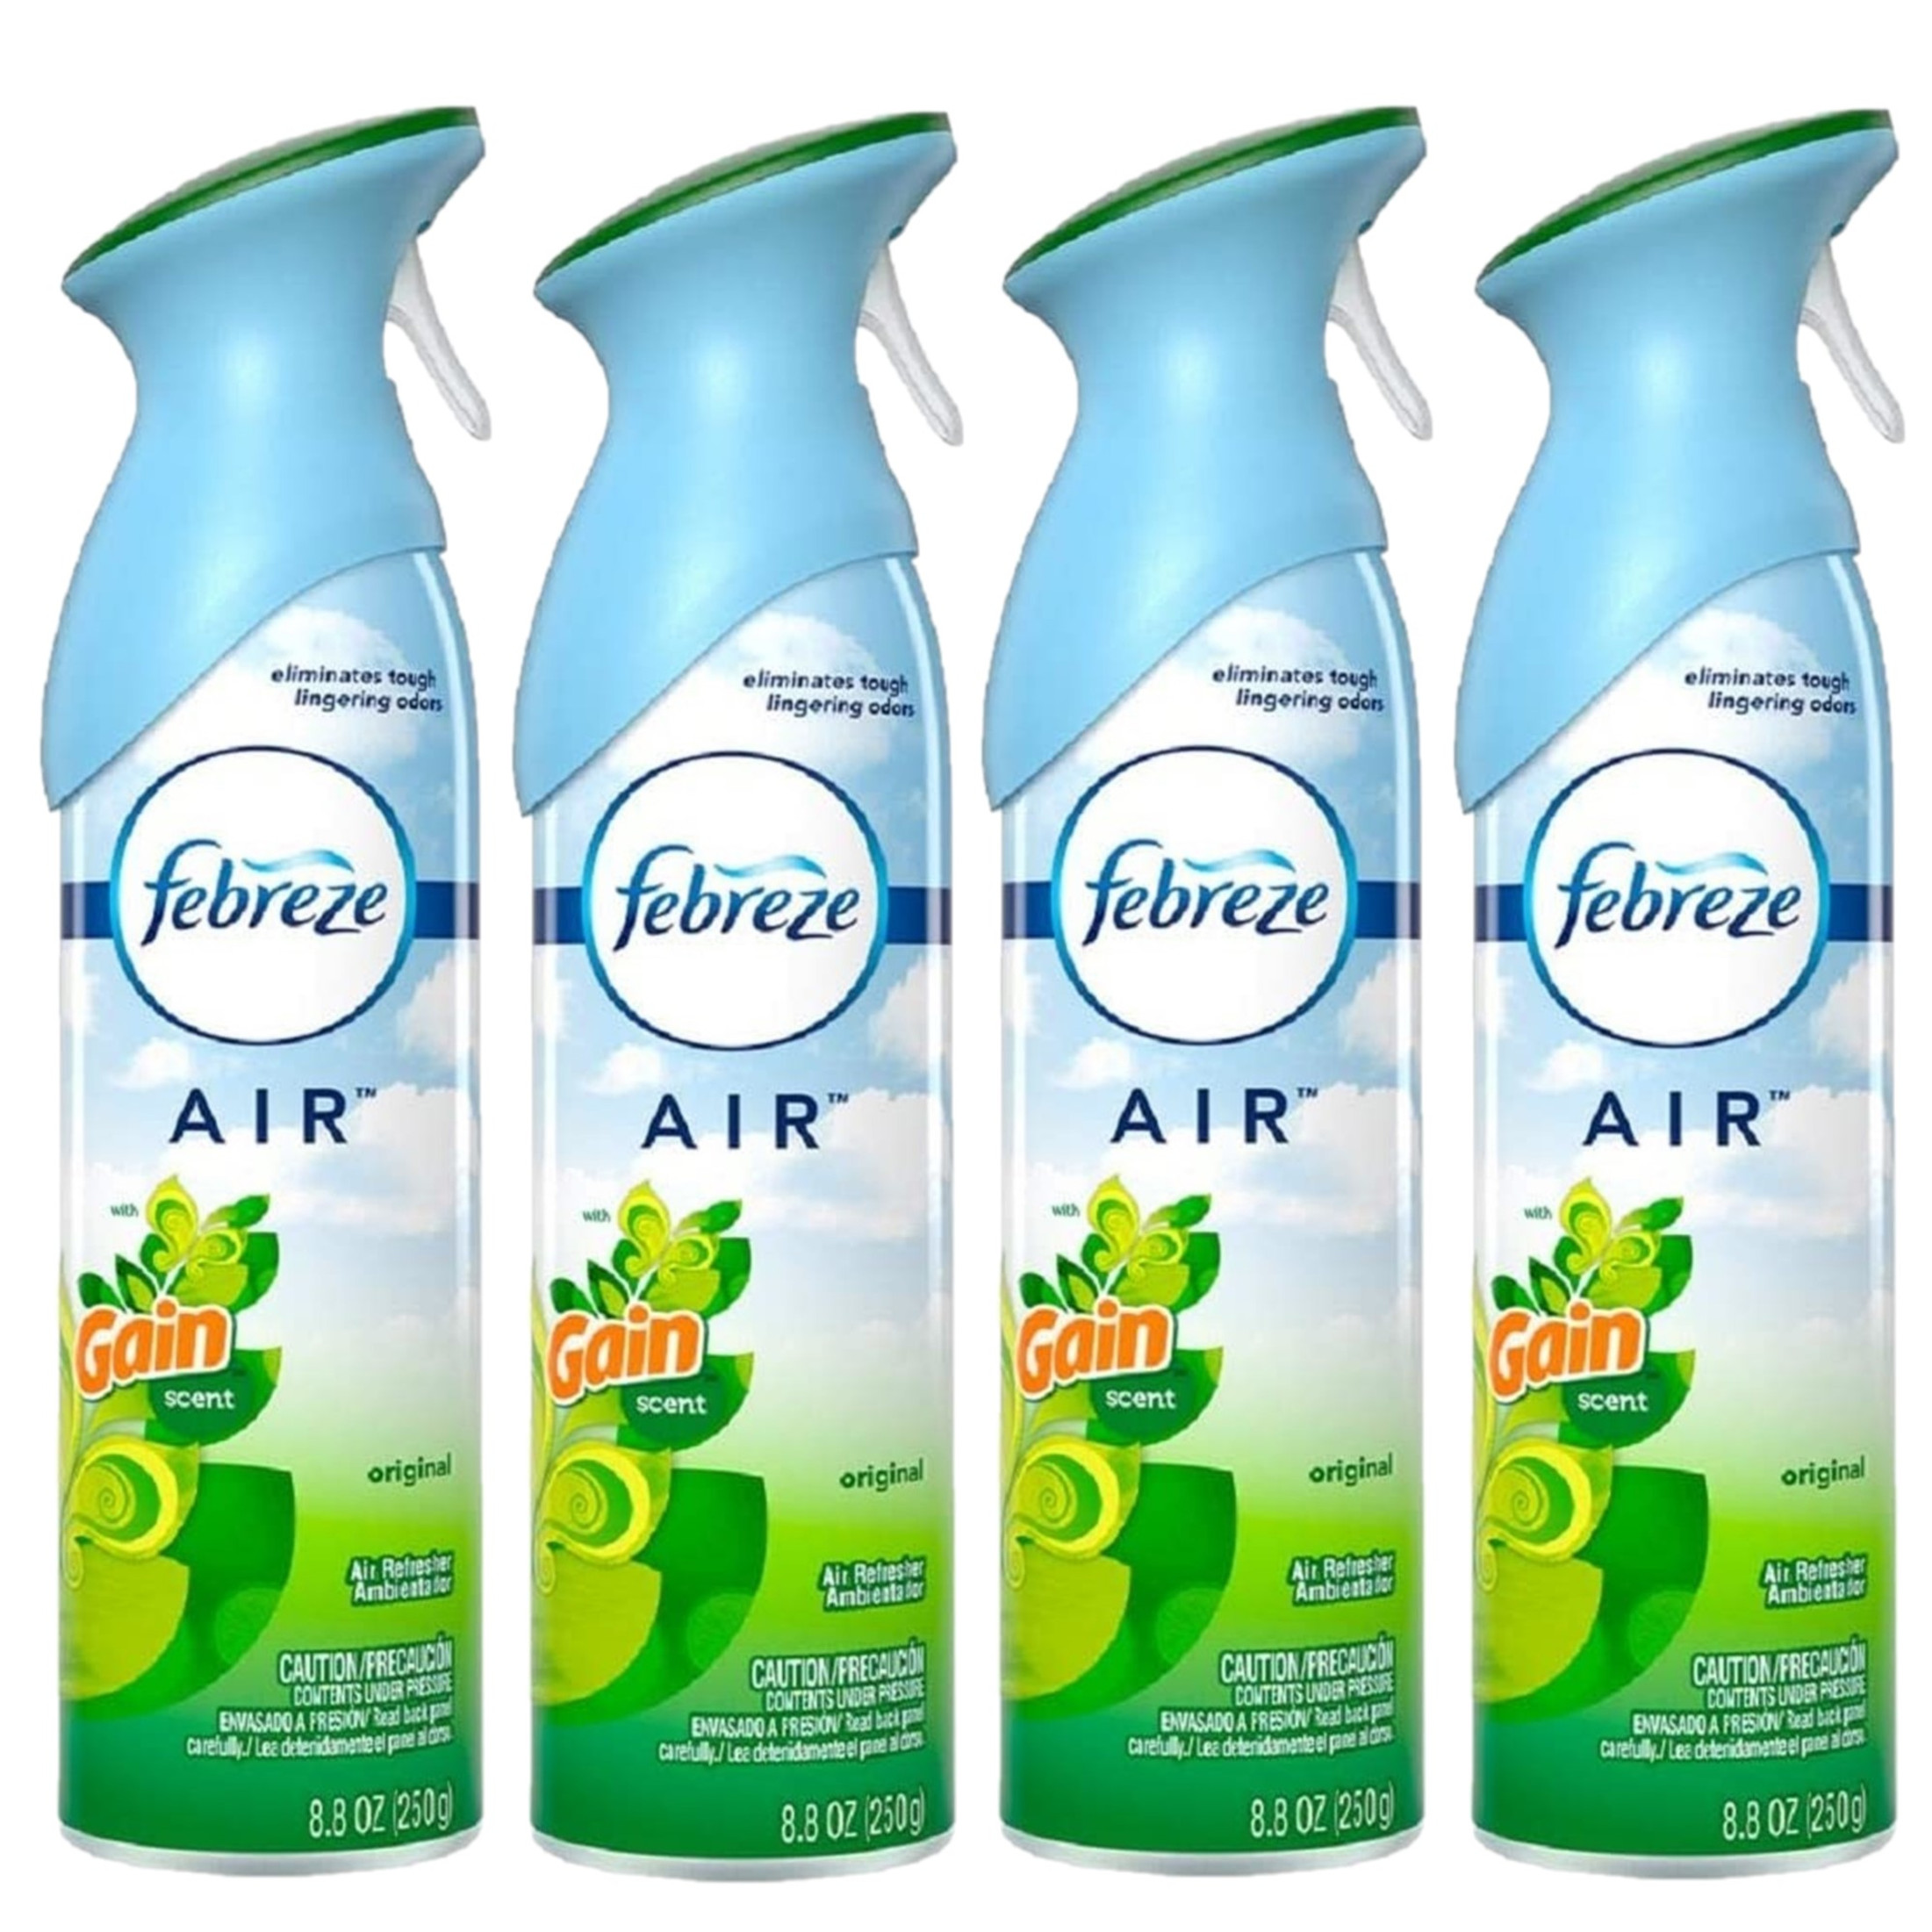 Febreze Odor-Eliminating Air Freshener with Gain Original Scent, 8.8 fl oz (Pack of 4)